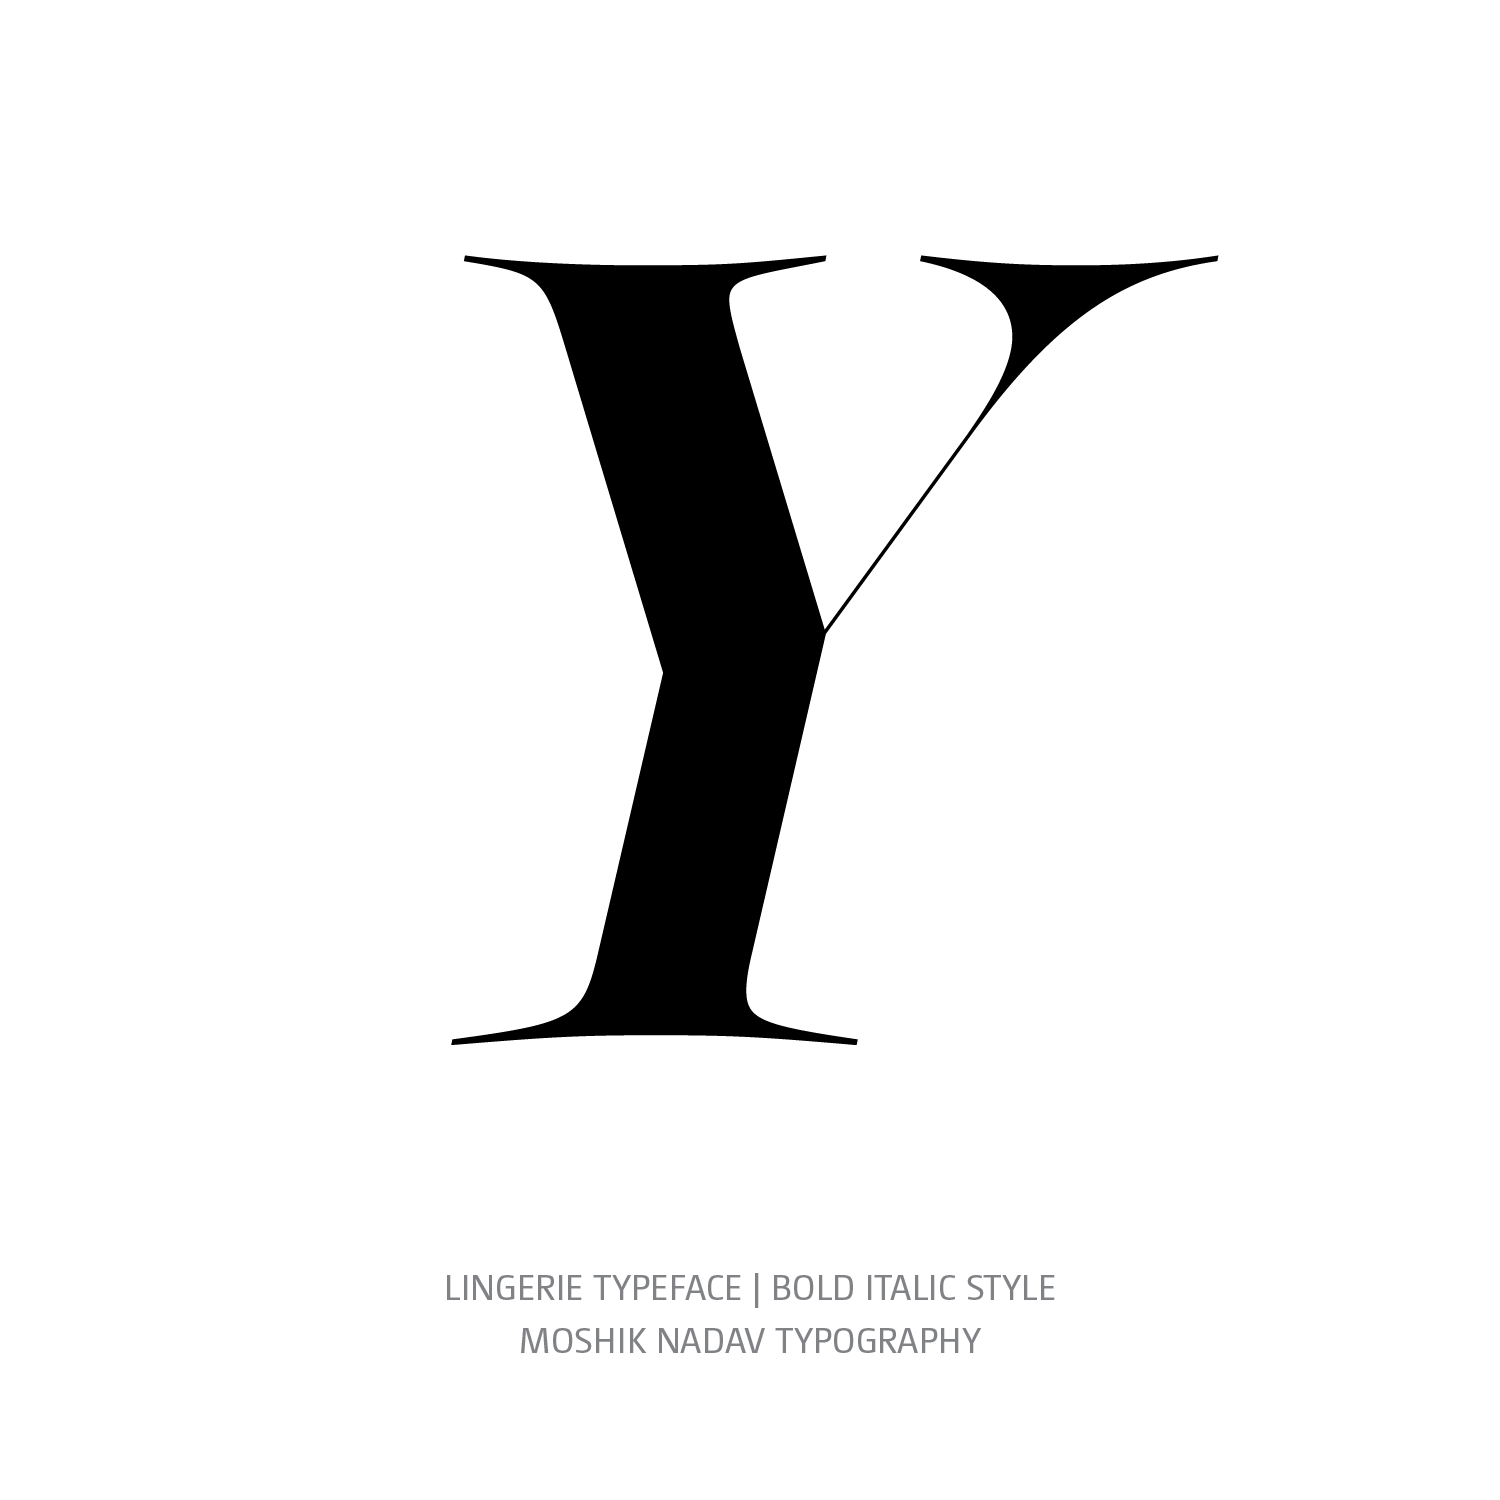 Lingerie Typeface Bold Italic Y